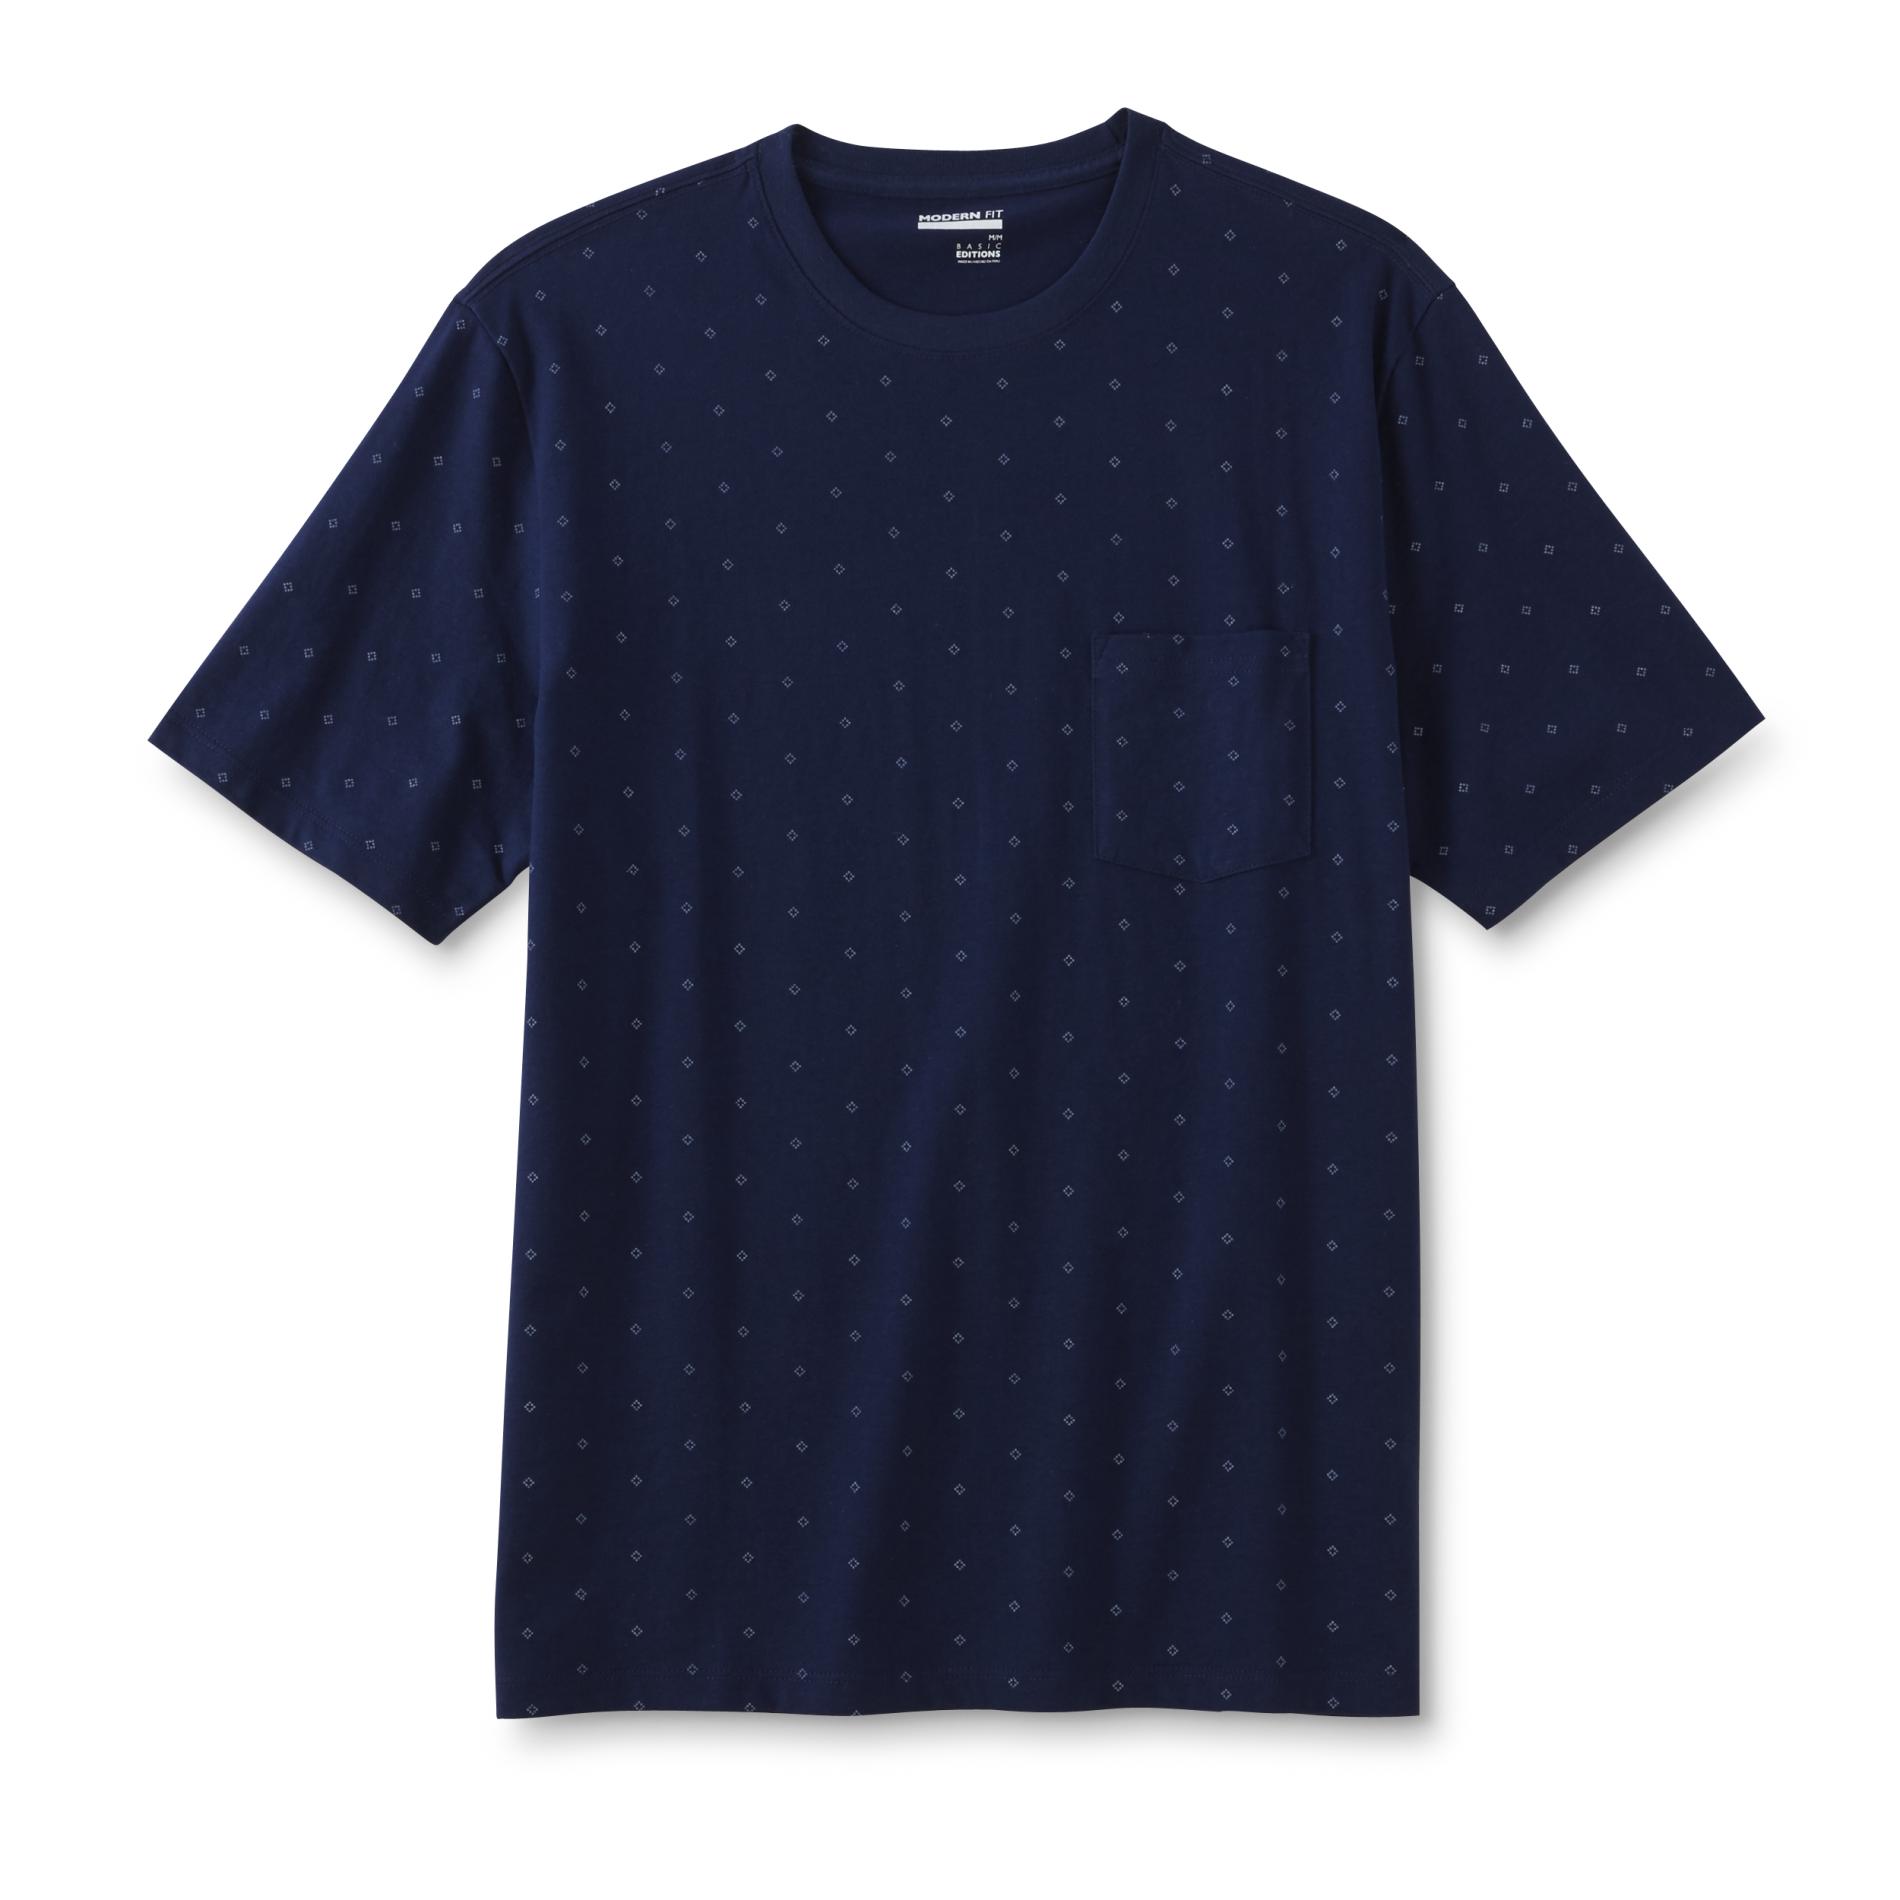 Basic Editions Men's Printed Pocket T-Shirt